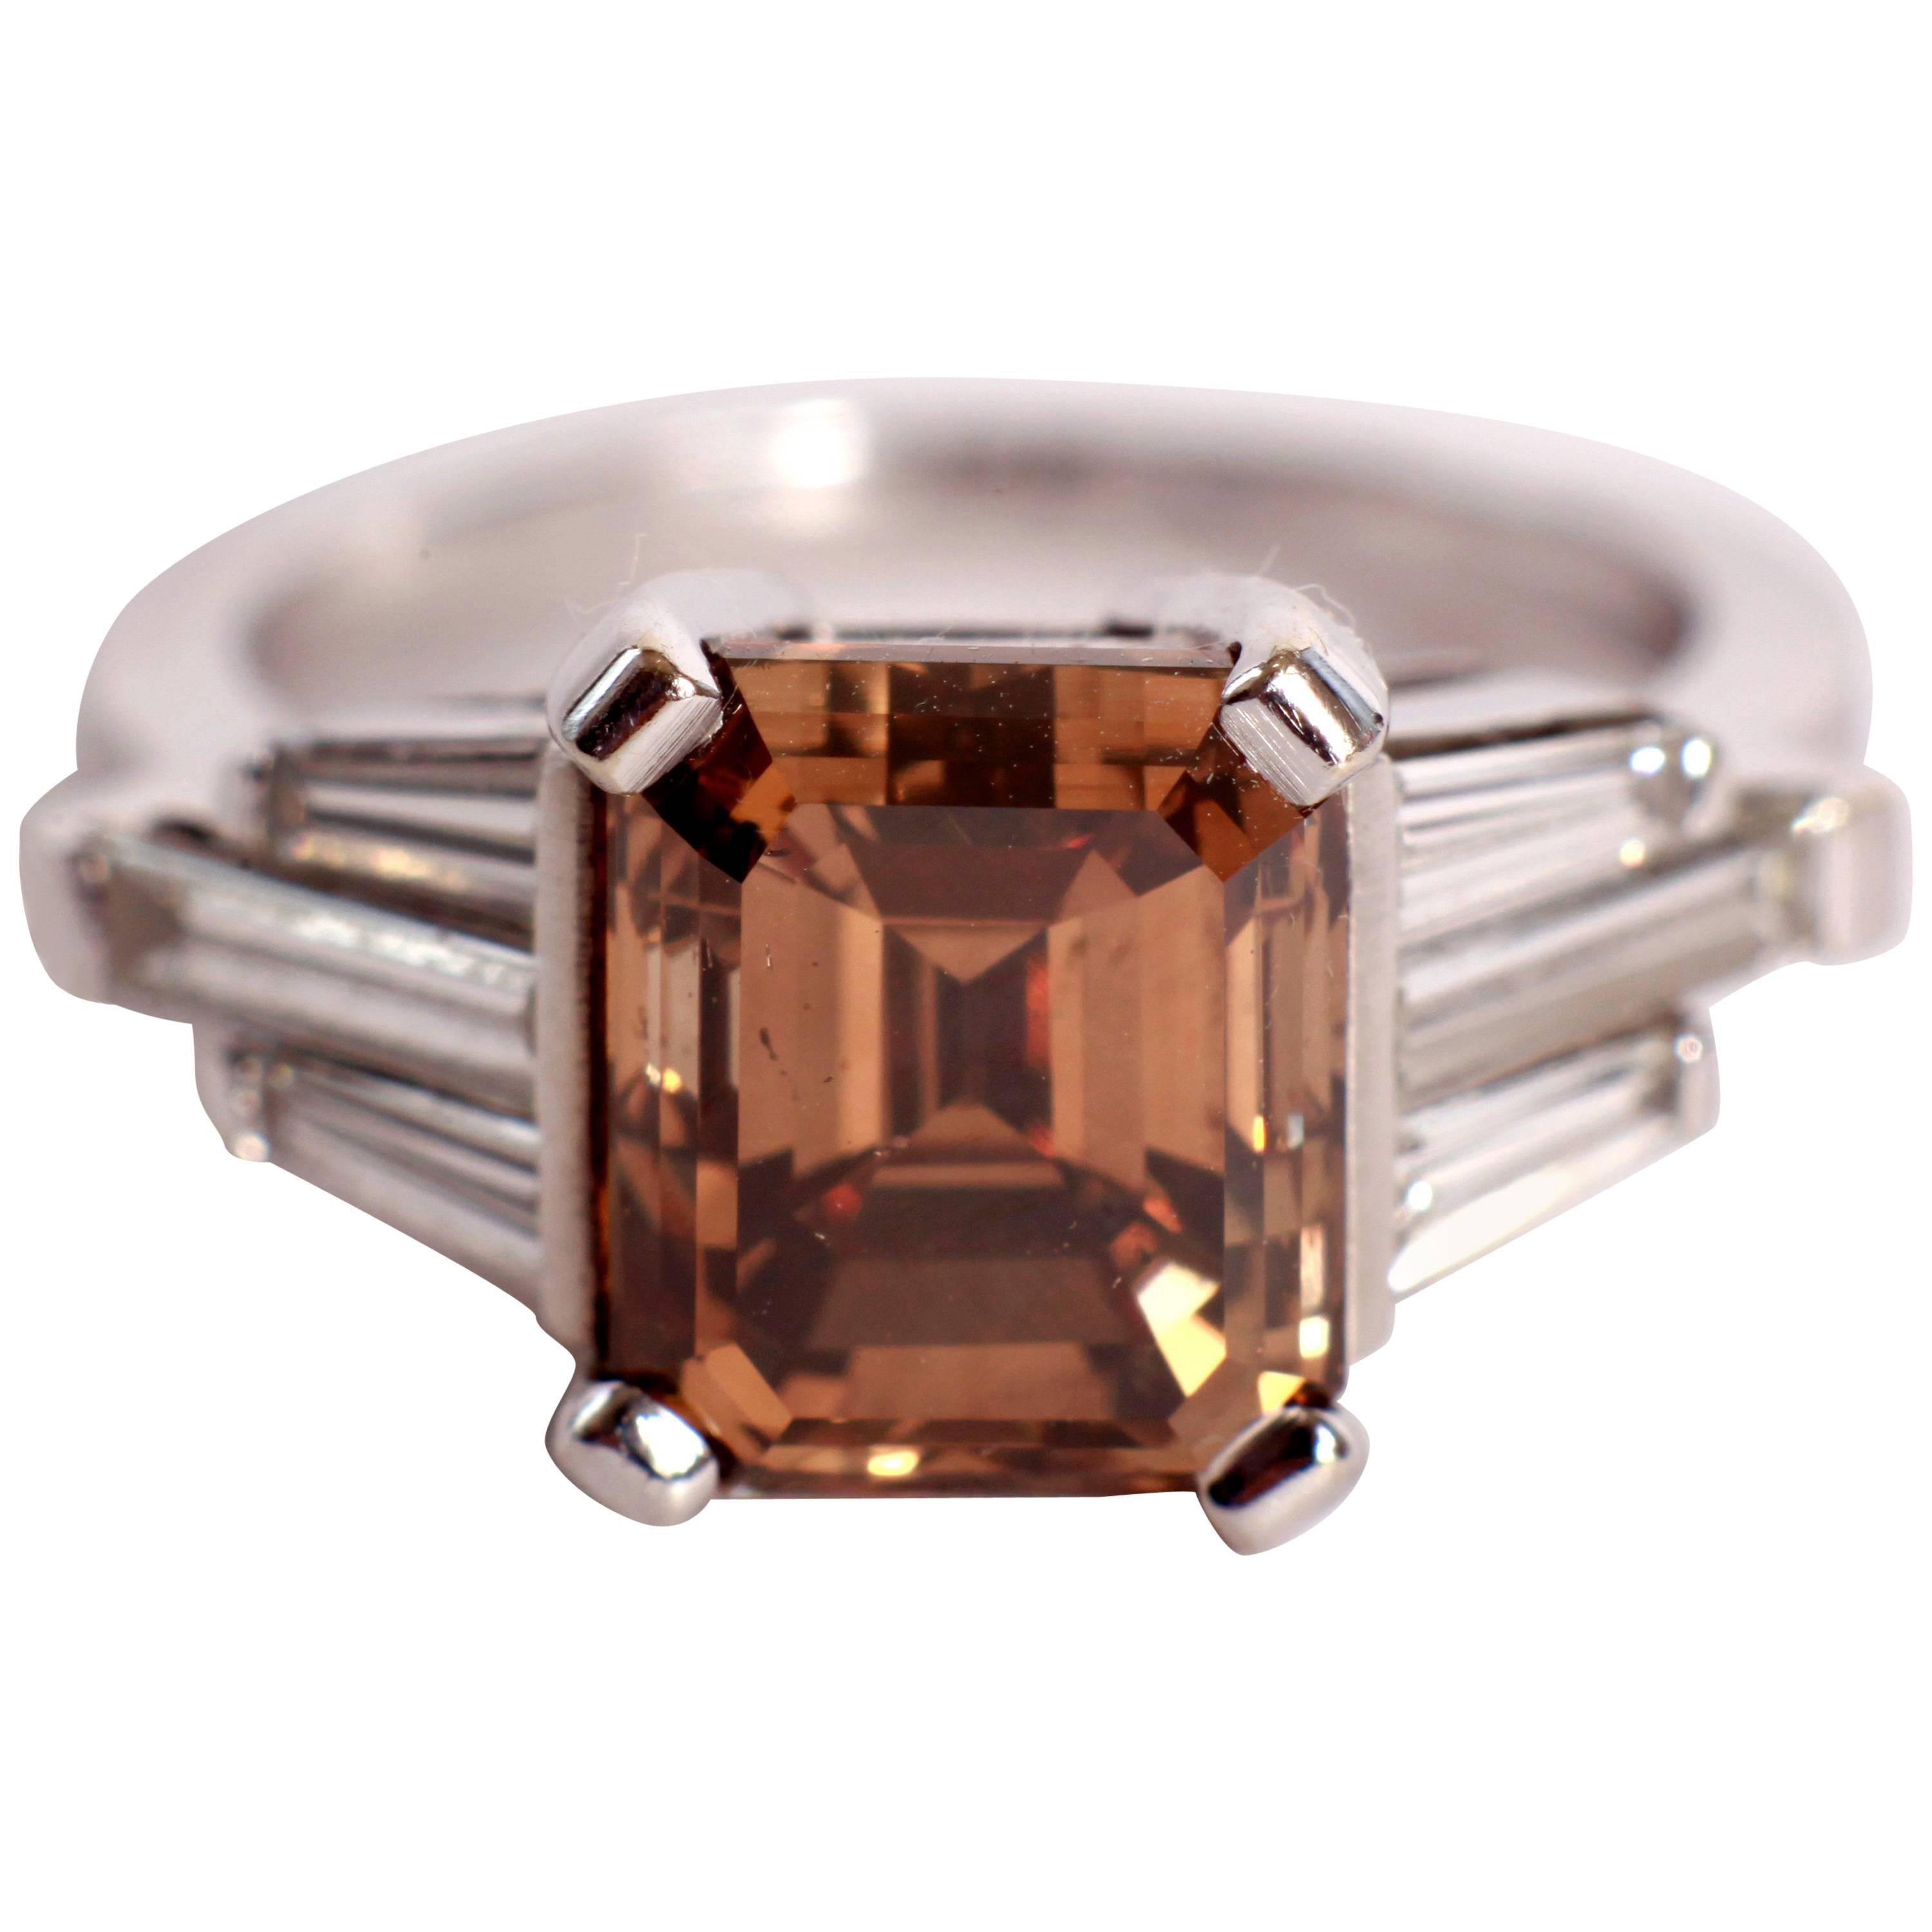 Unique 4.32 Carats Emerald Cut Chocolate Diamond, 18K White Gold Ring  For Sale